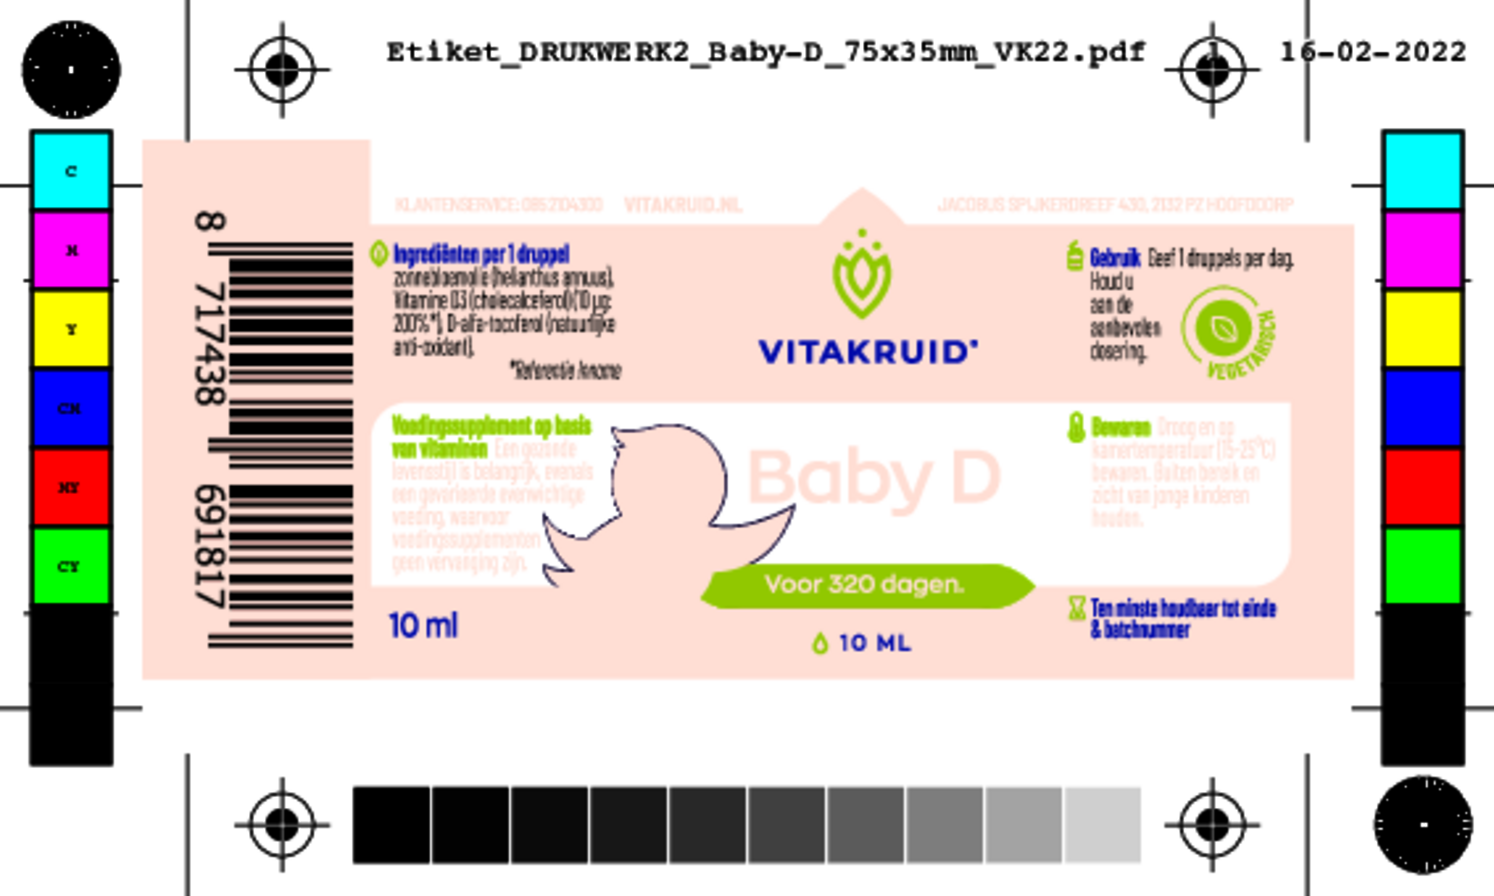 Vitamine D Baby afbeelding van document #1, etiket